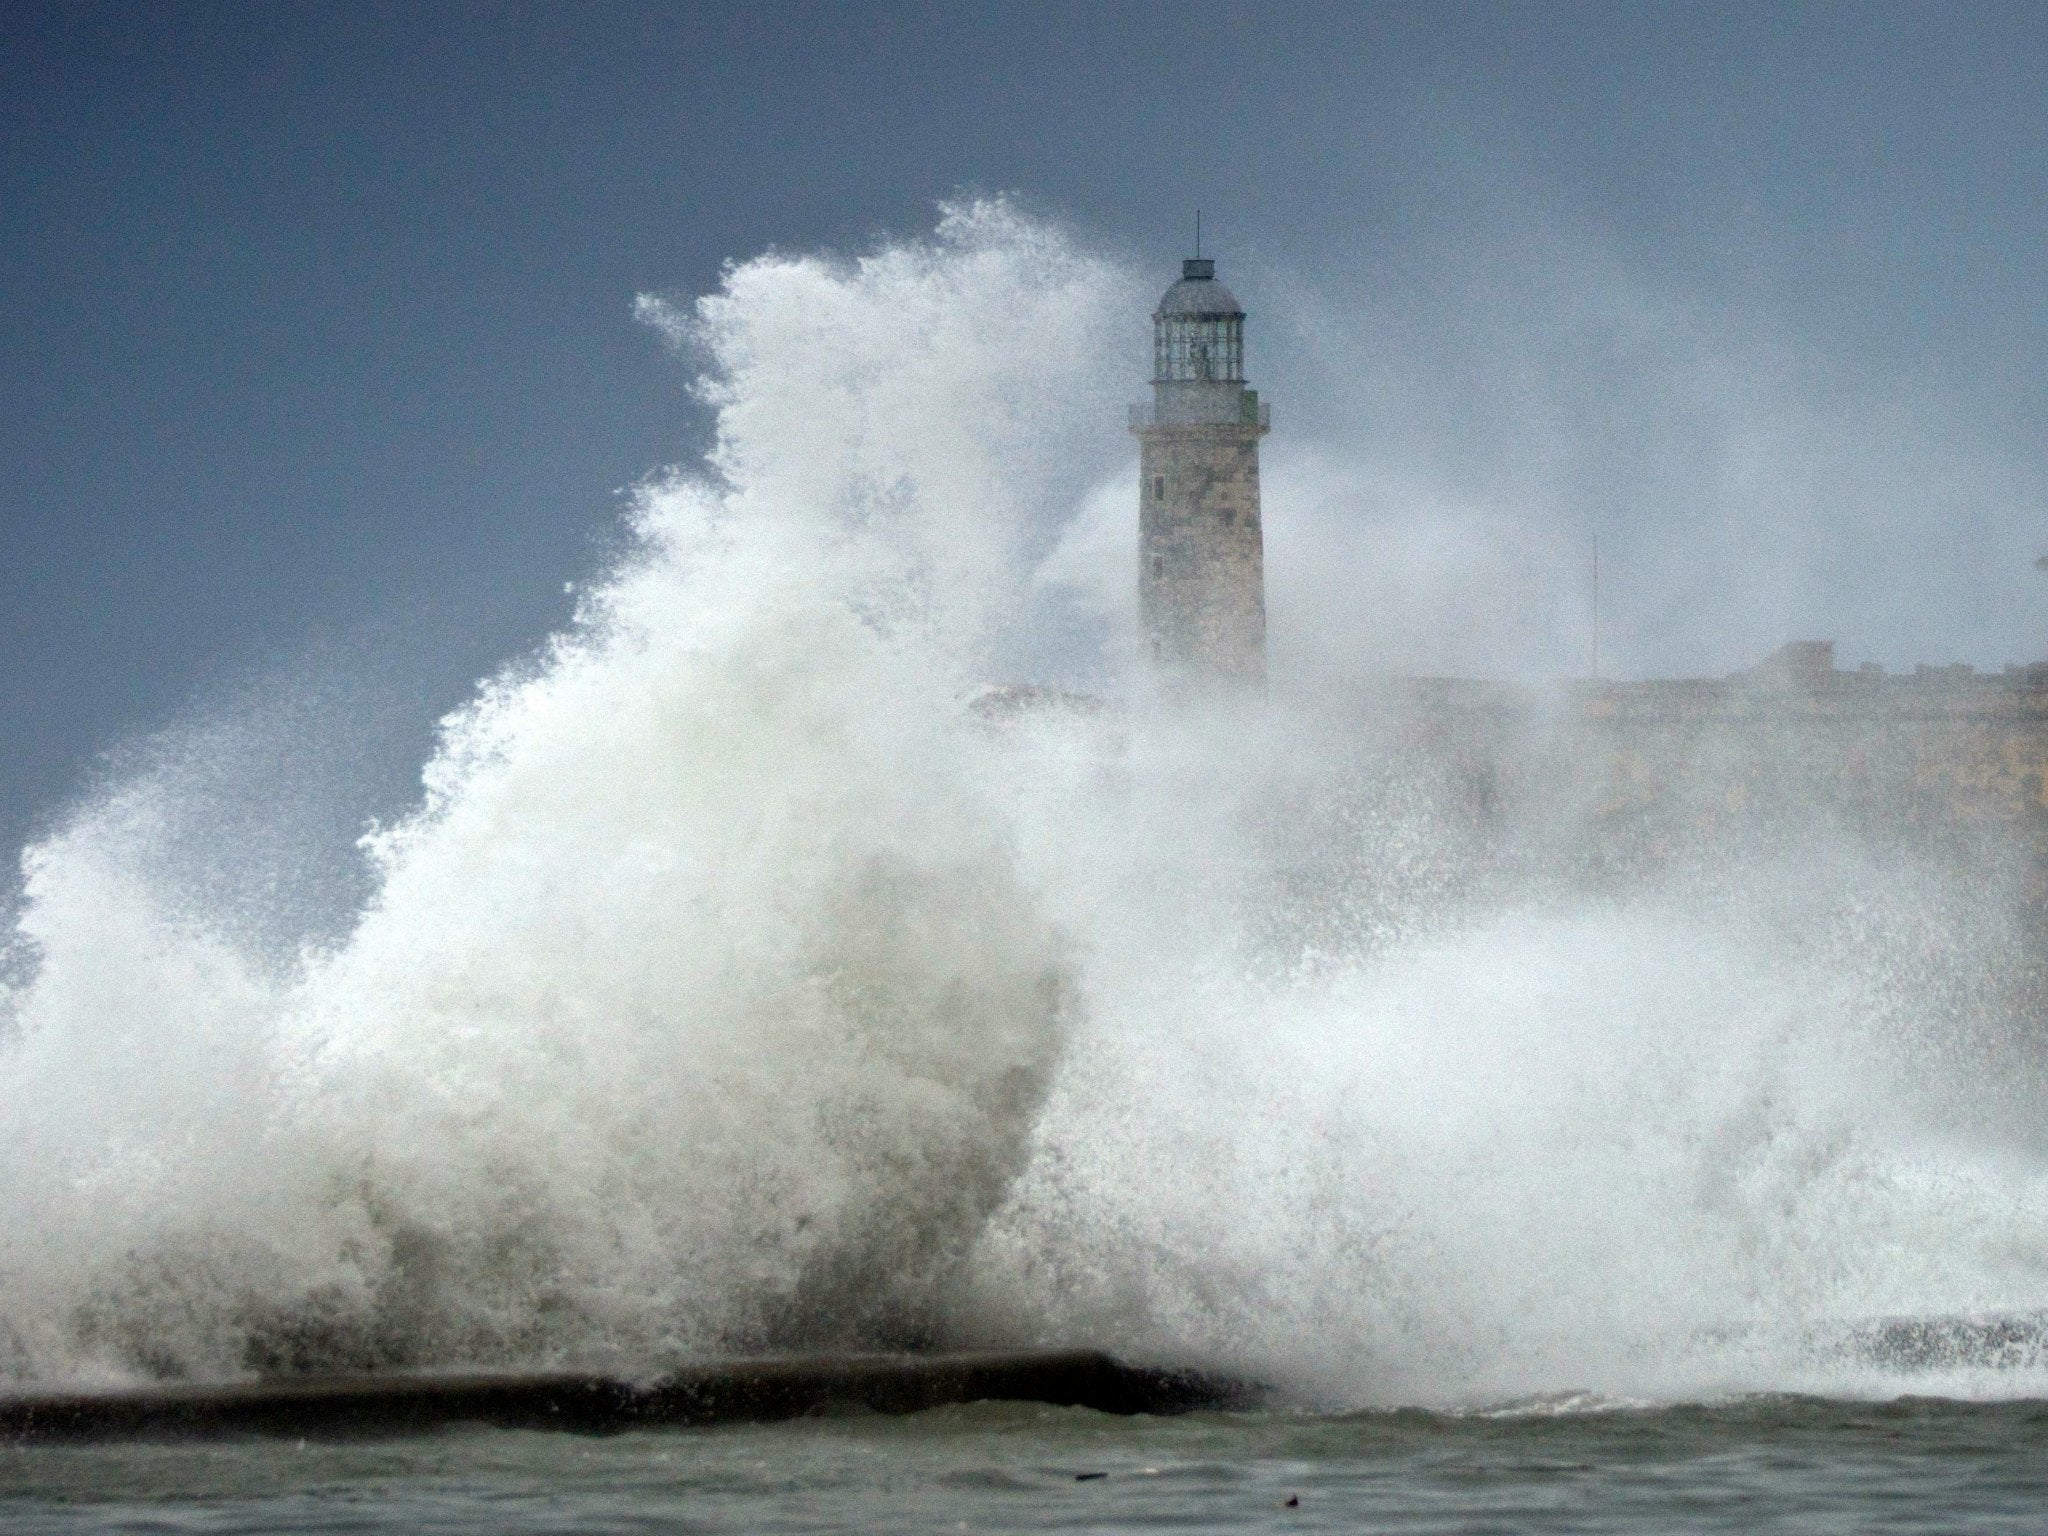 Waves crash into El Morro after the passing of Hurricane Irma, in Havana, Cuba